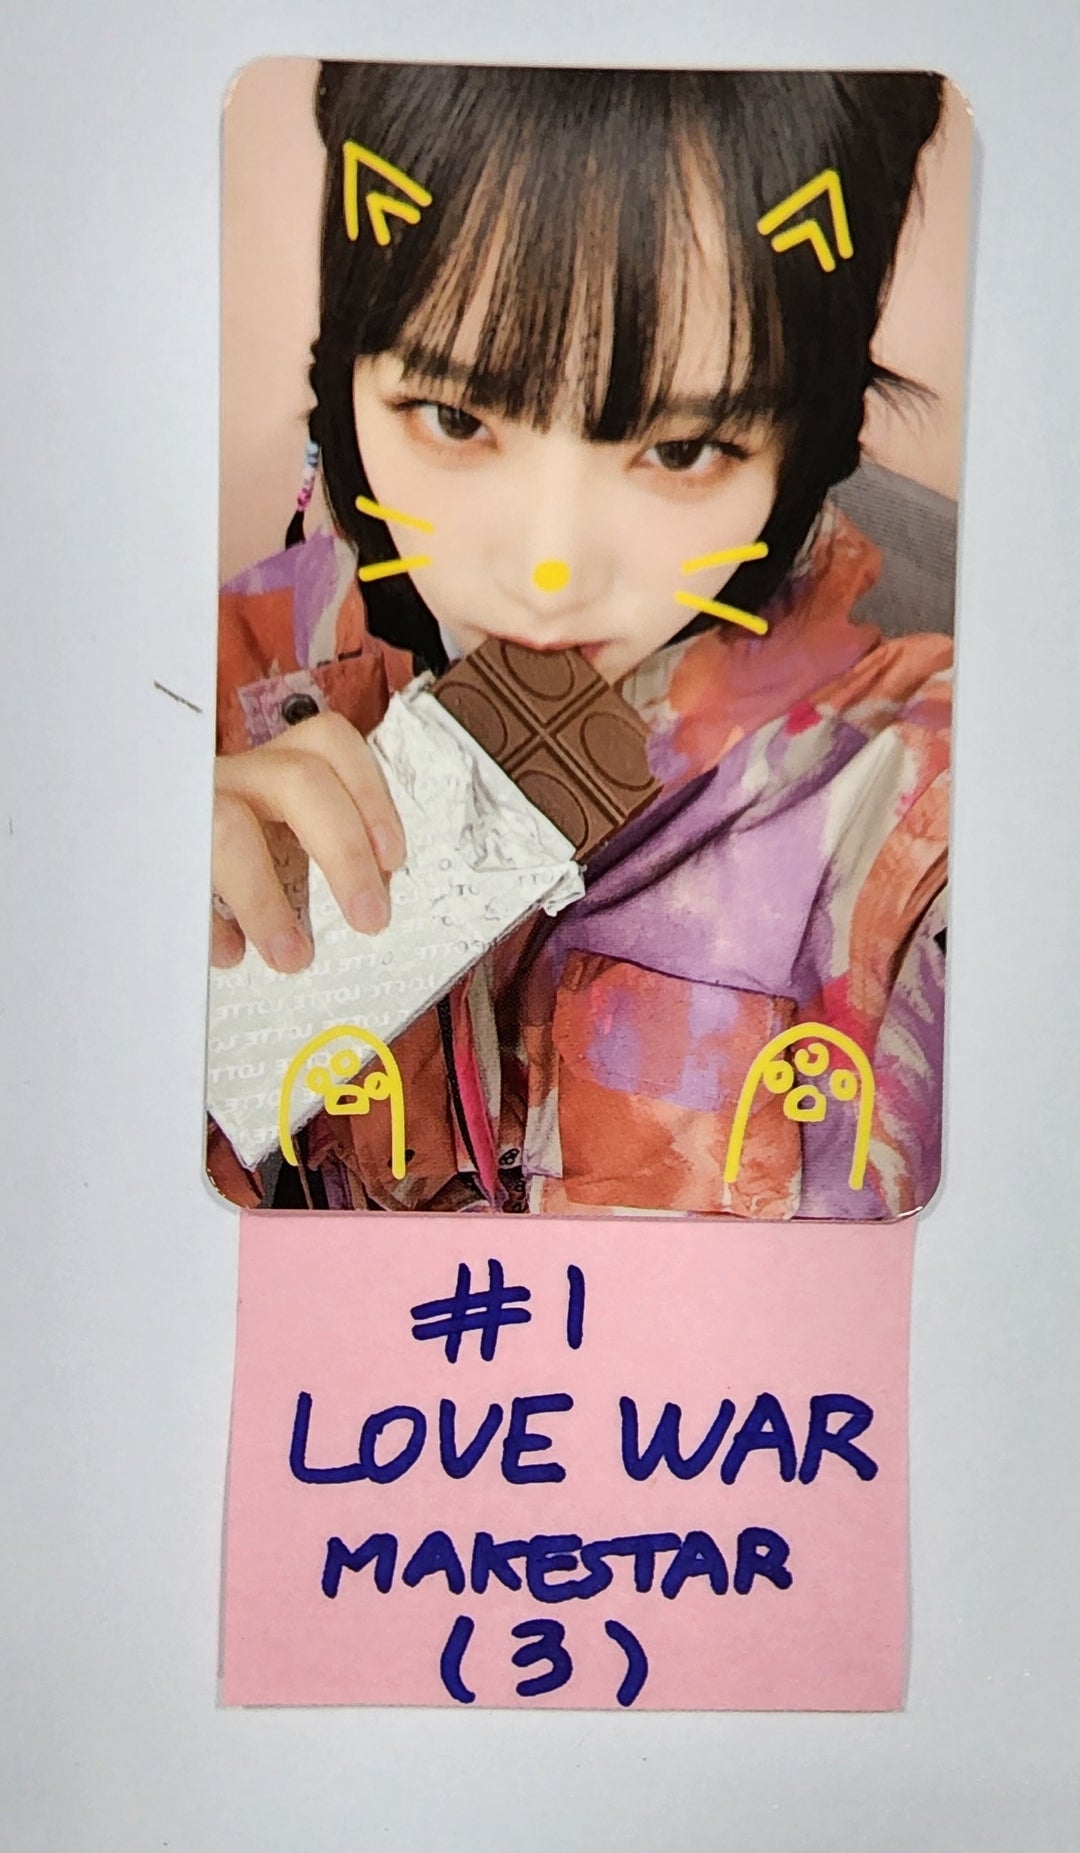 YENA 「Love War」 - Makestar ファンサイン会フォトカード第 2 弾 [ポカアルバム]